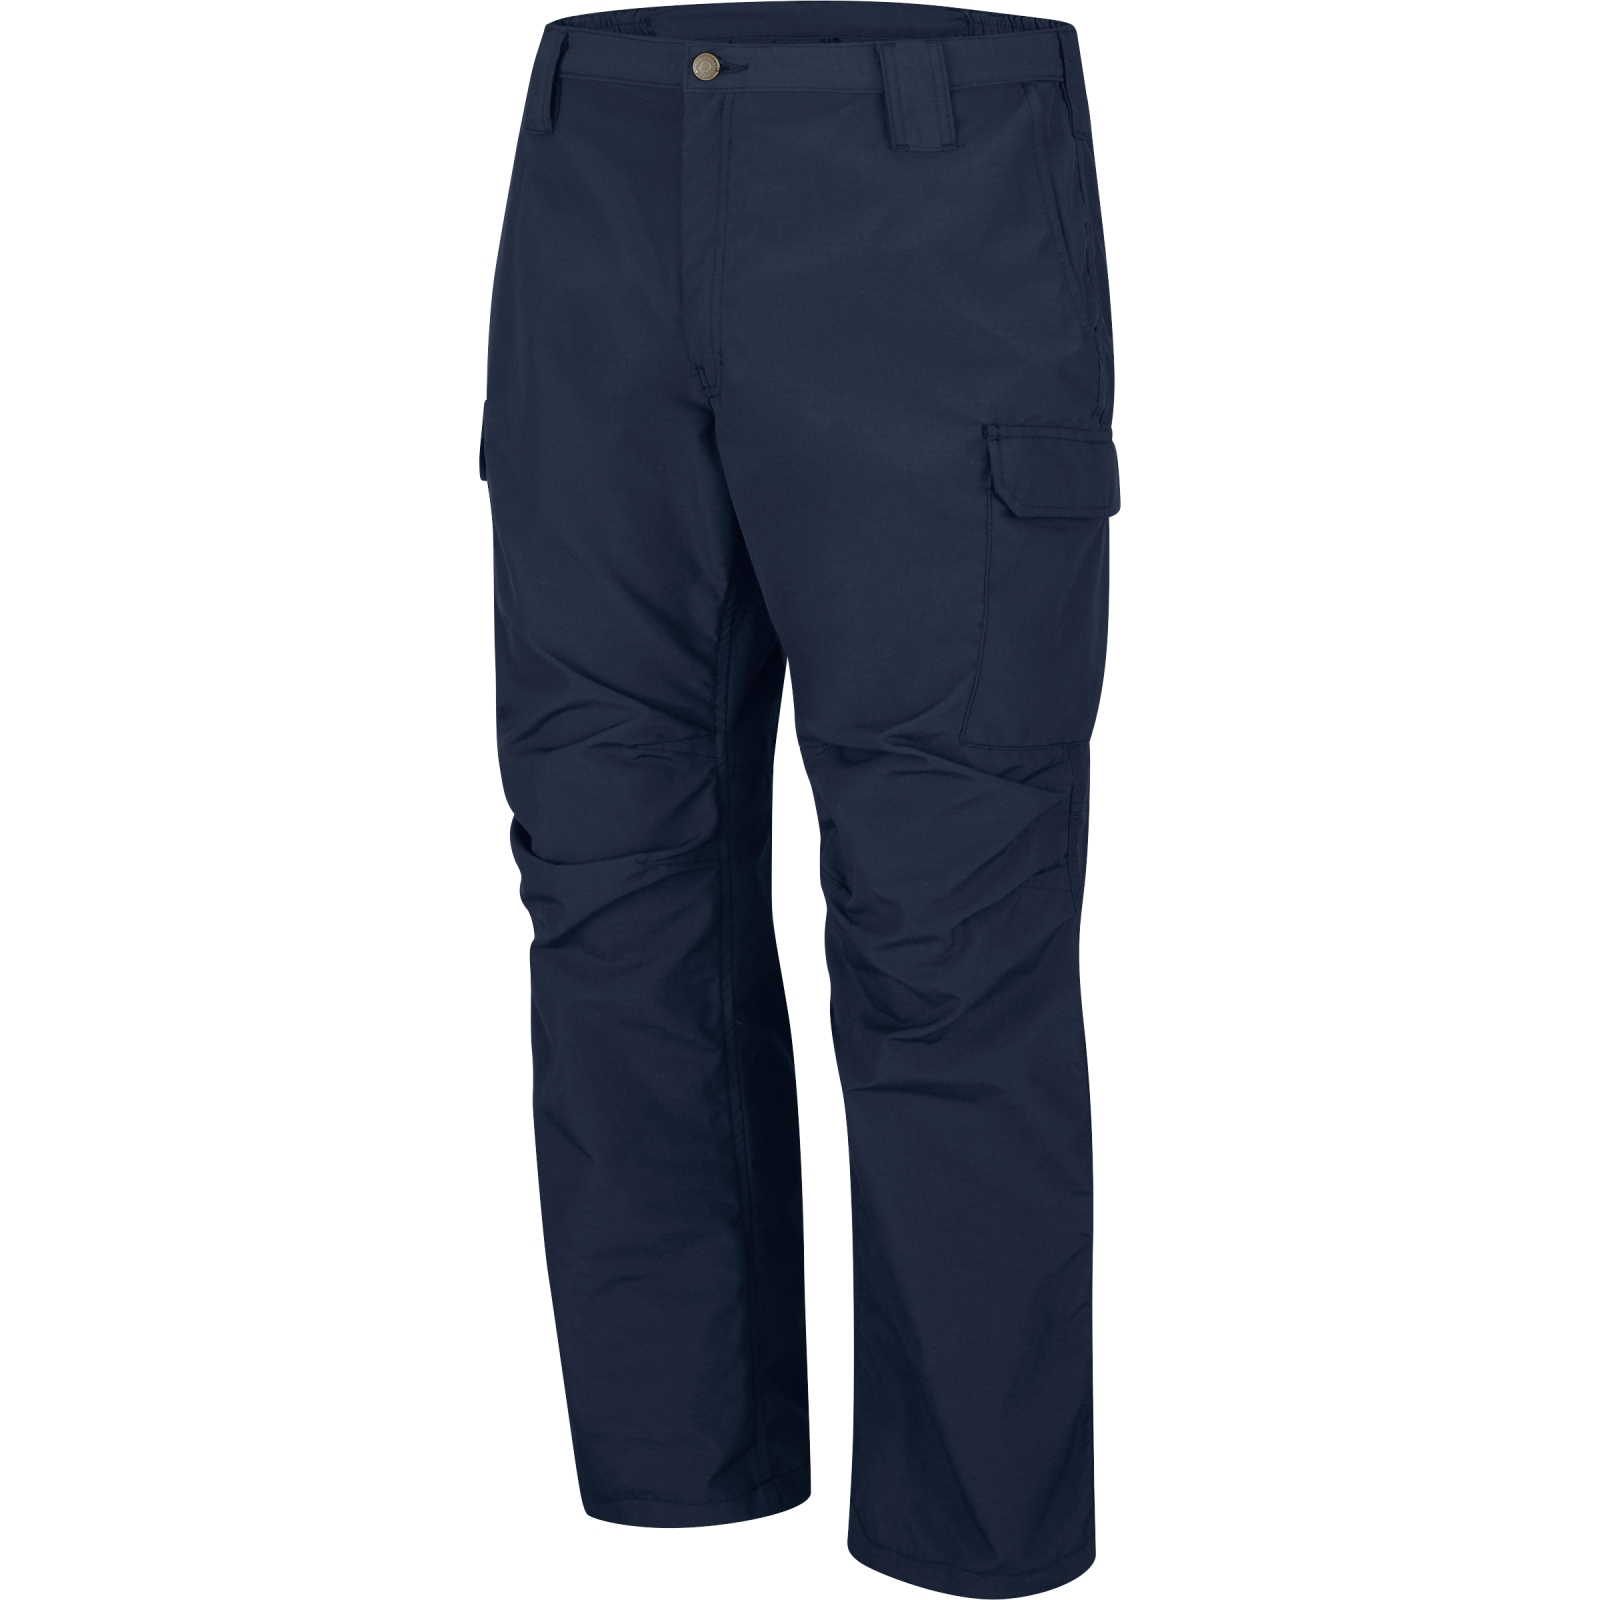 Workrite FR Firefighter Nomex Navy Blue Uniform Station Pants Mens 34x27 